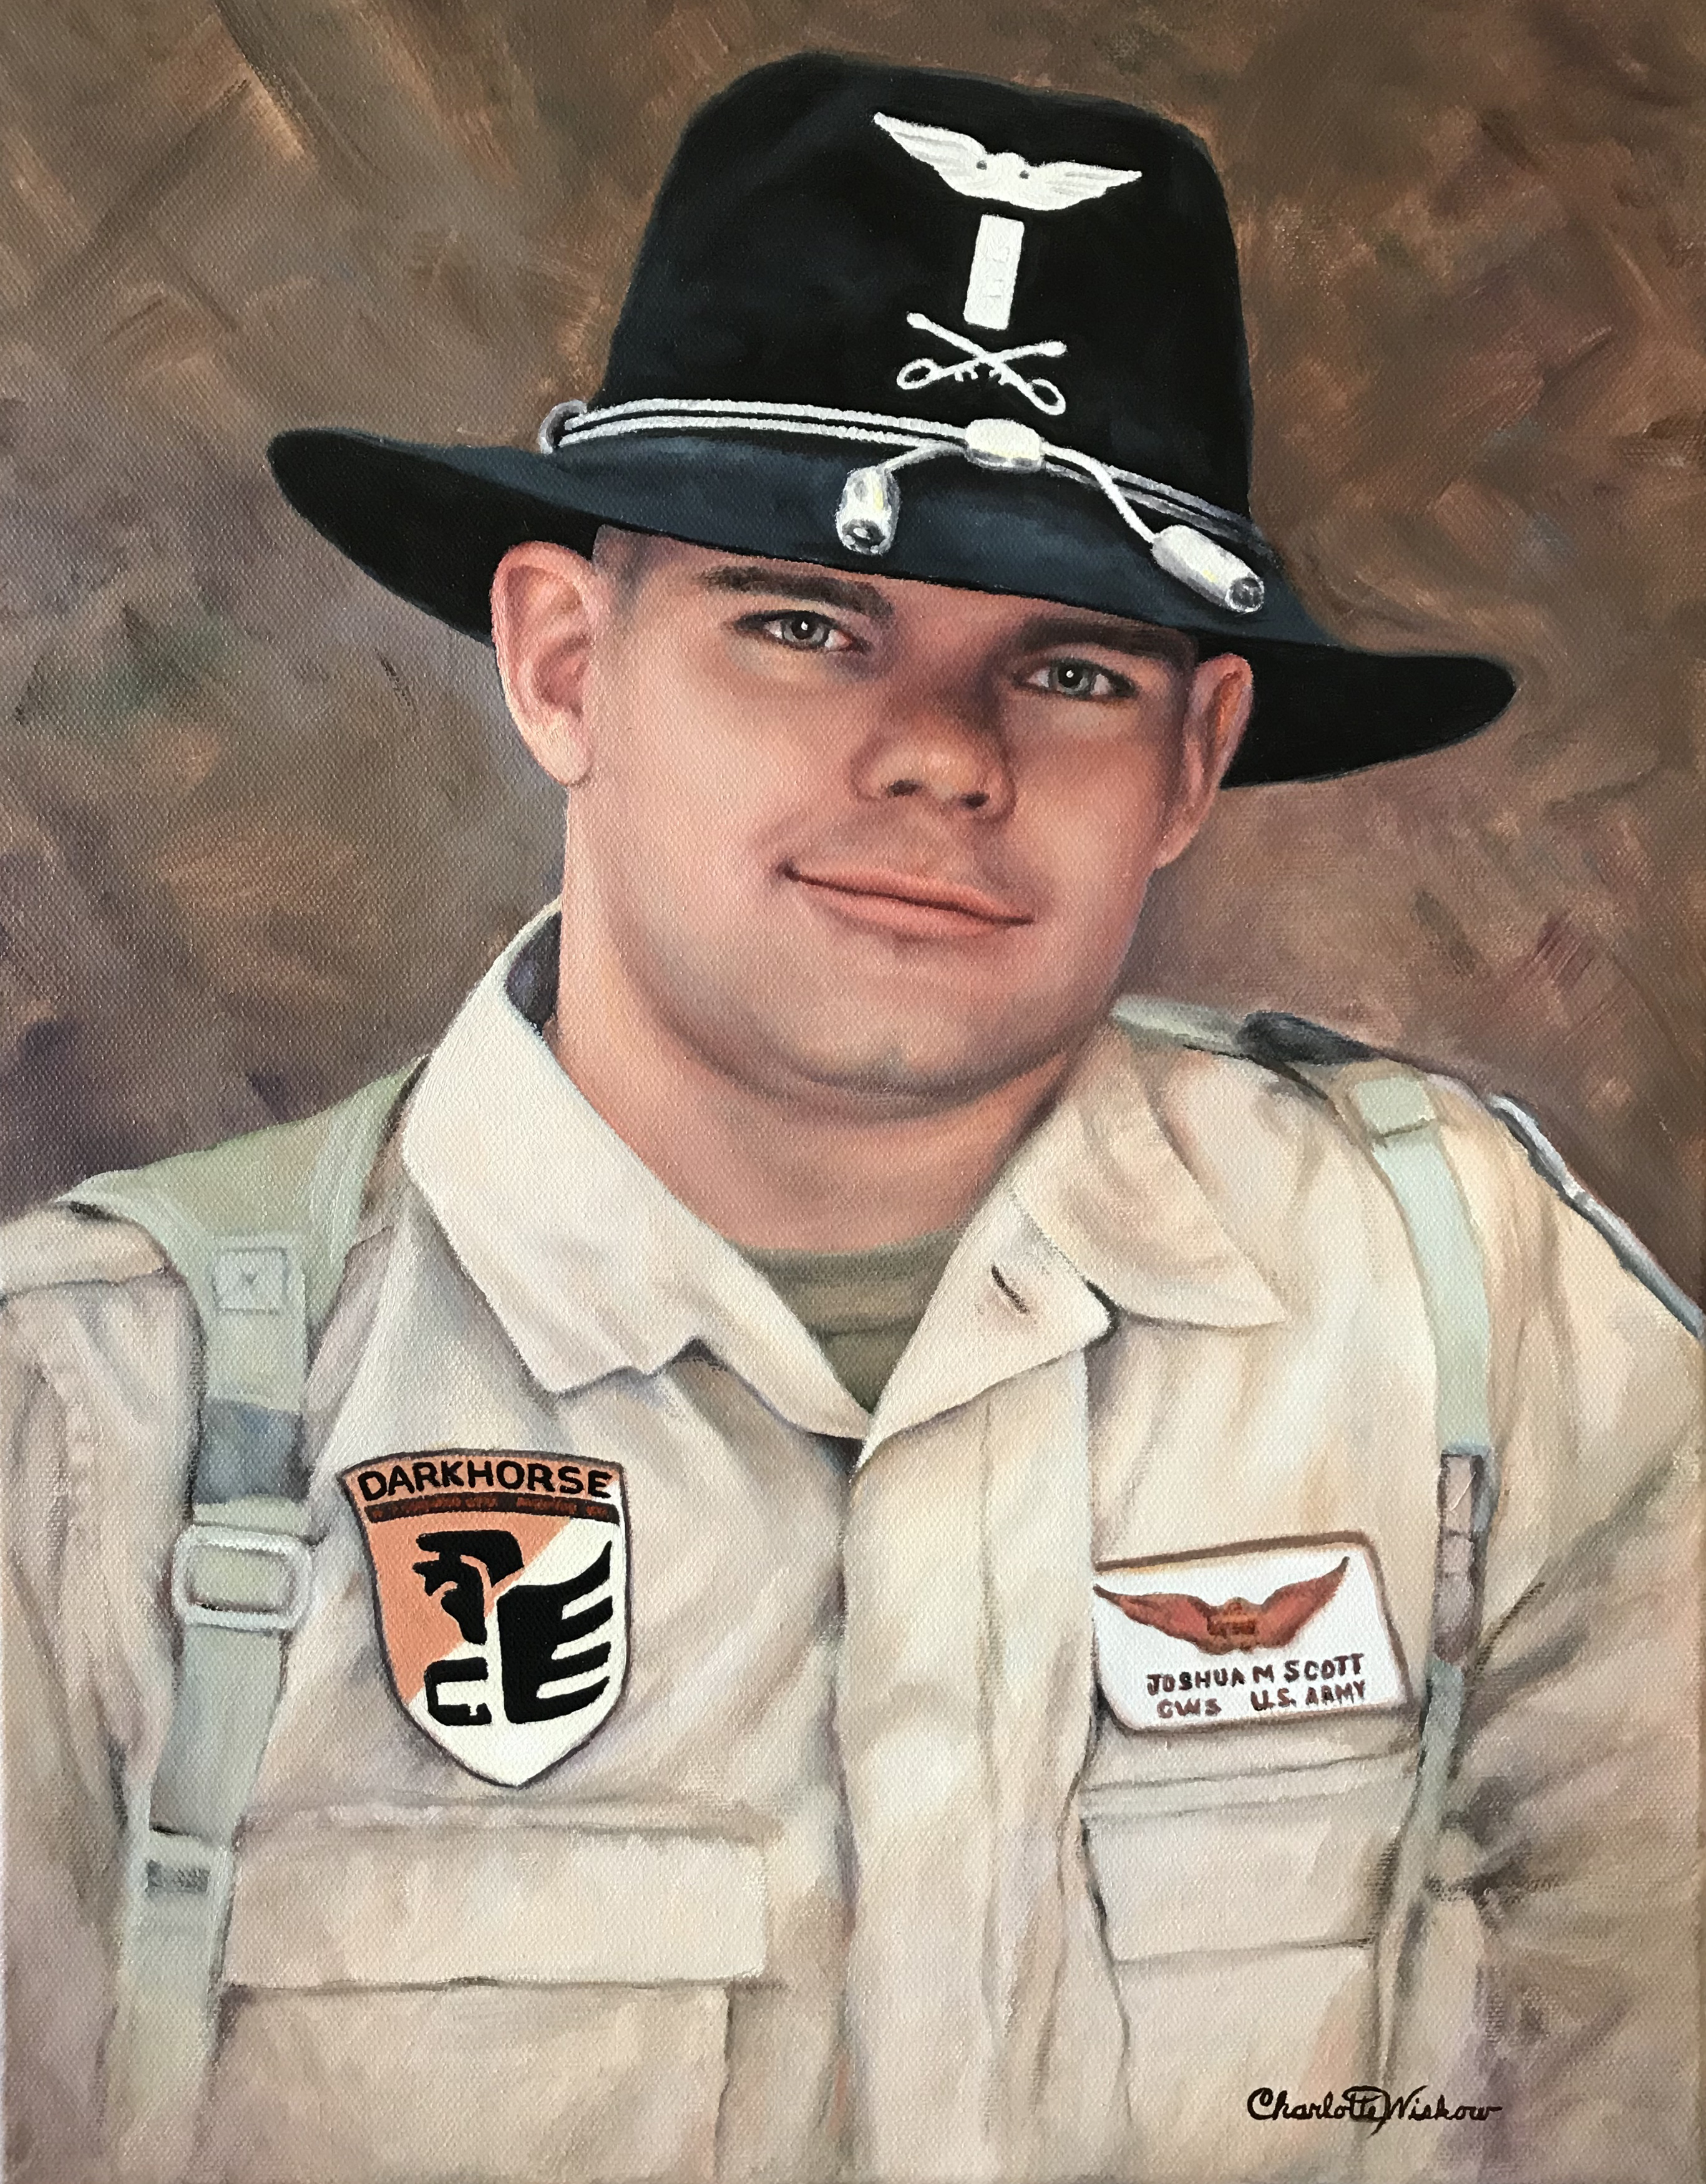 Fallen Hero CW2 Joshua M. Scott, US Army